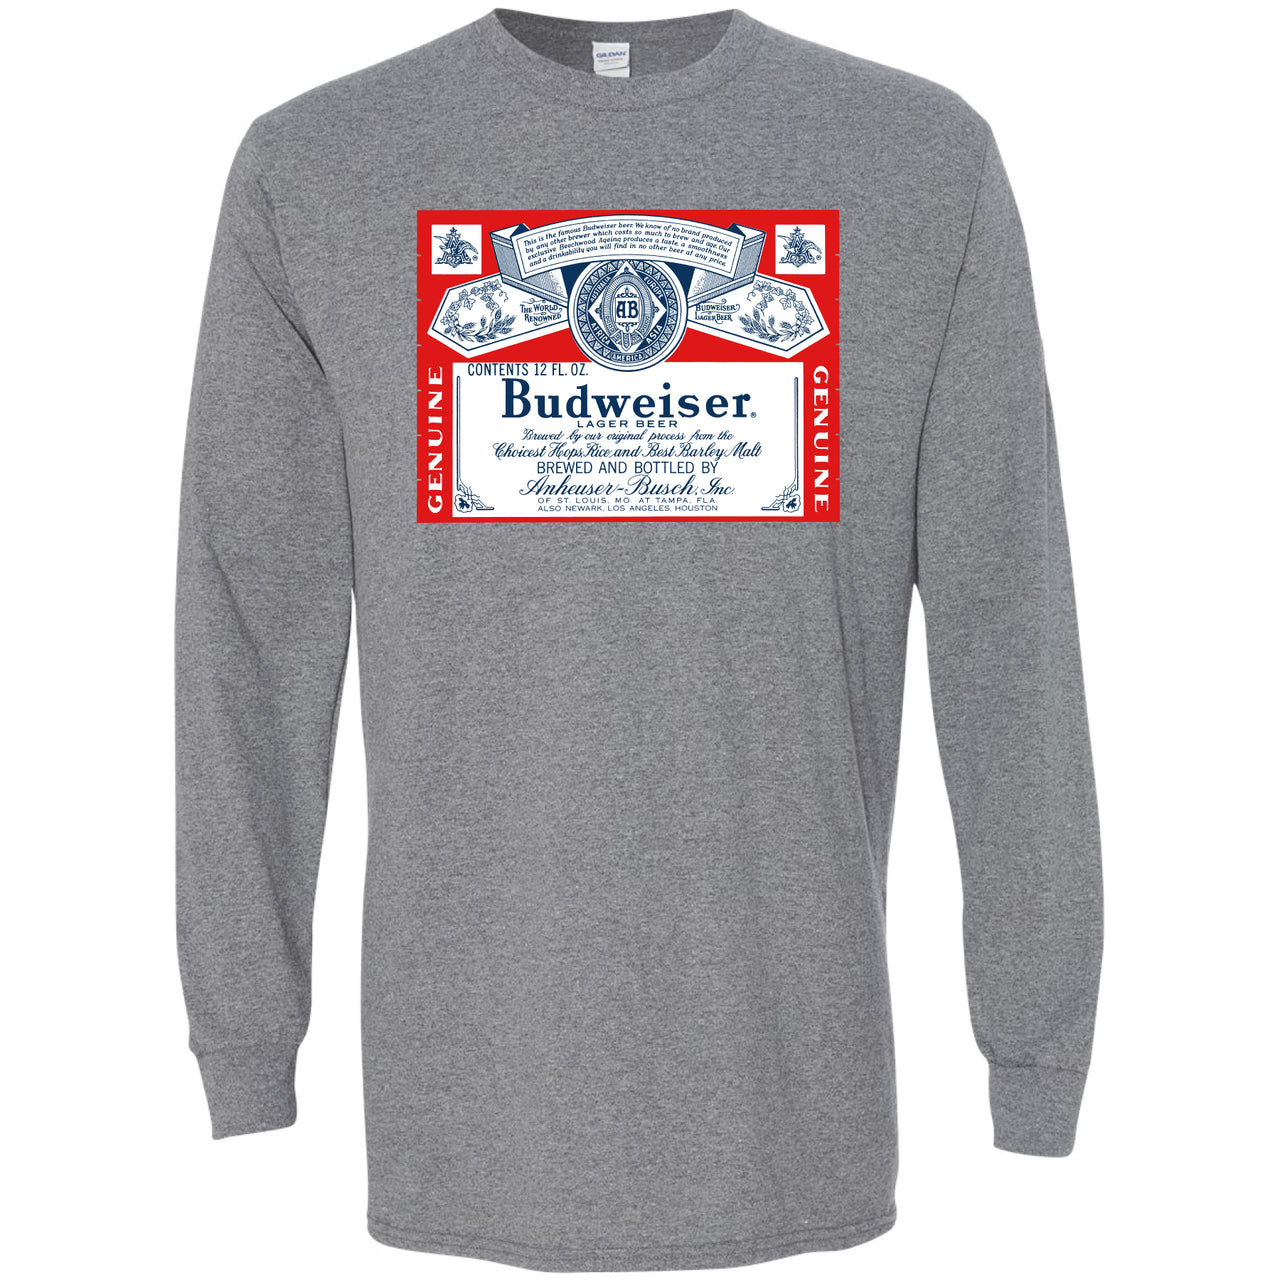 Budweiser - Vintage 1966 Label Long Sleeve T-Shirt